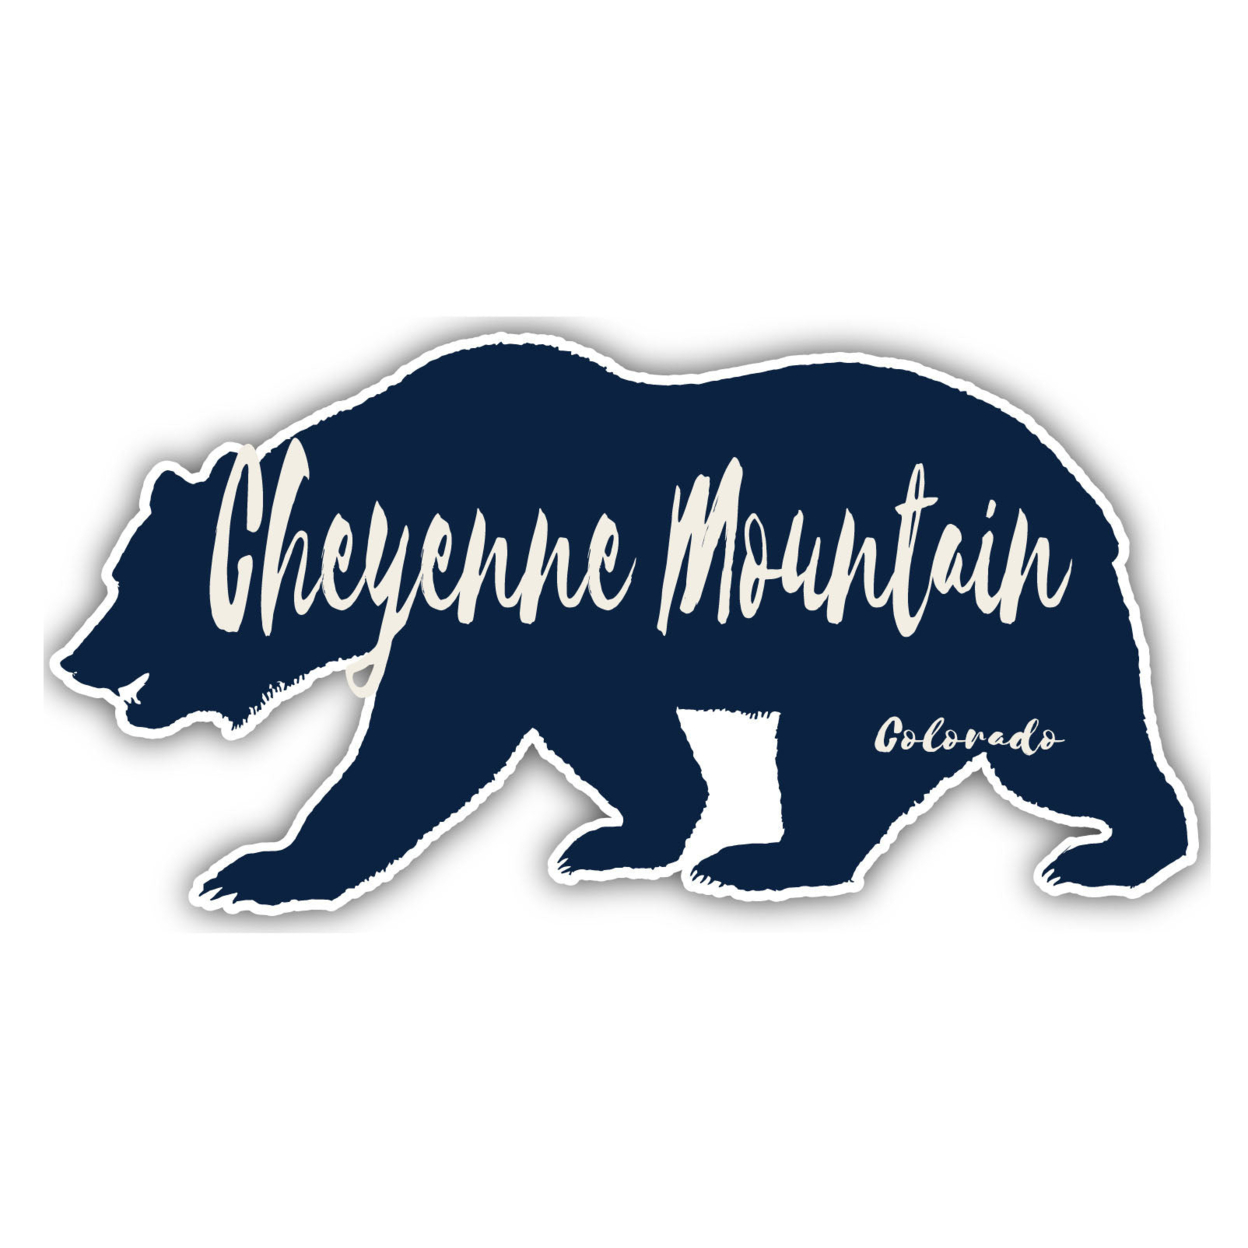 Cheyenne Mountain Colorado Souvenir Decorative Stickers (Choose Theme And Size) - Single Unit, 6-Inch, Camp Life